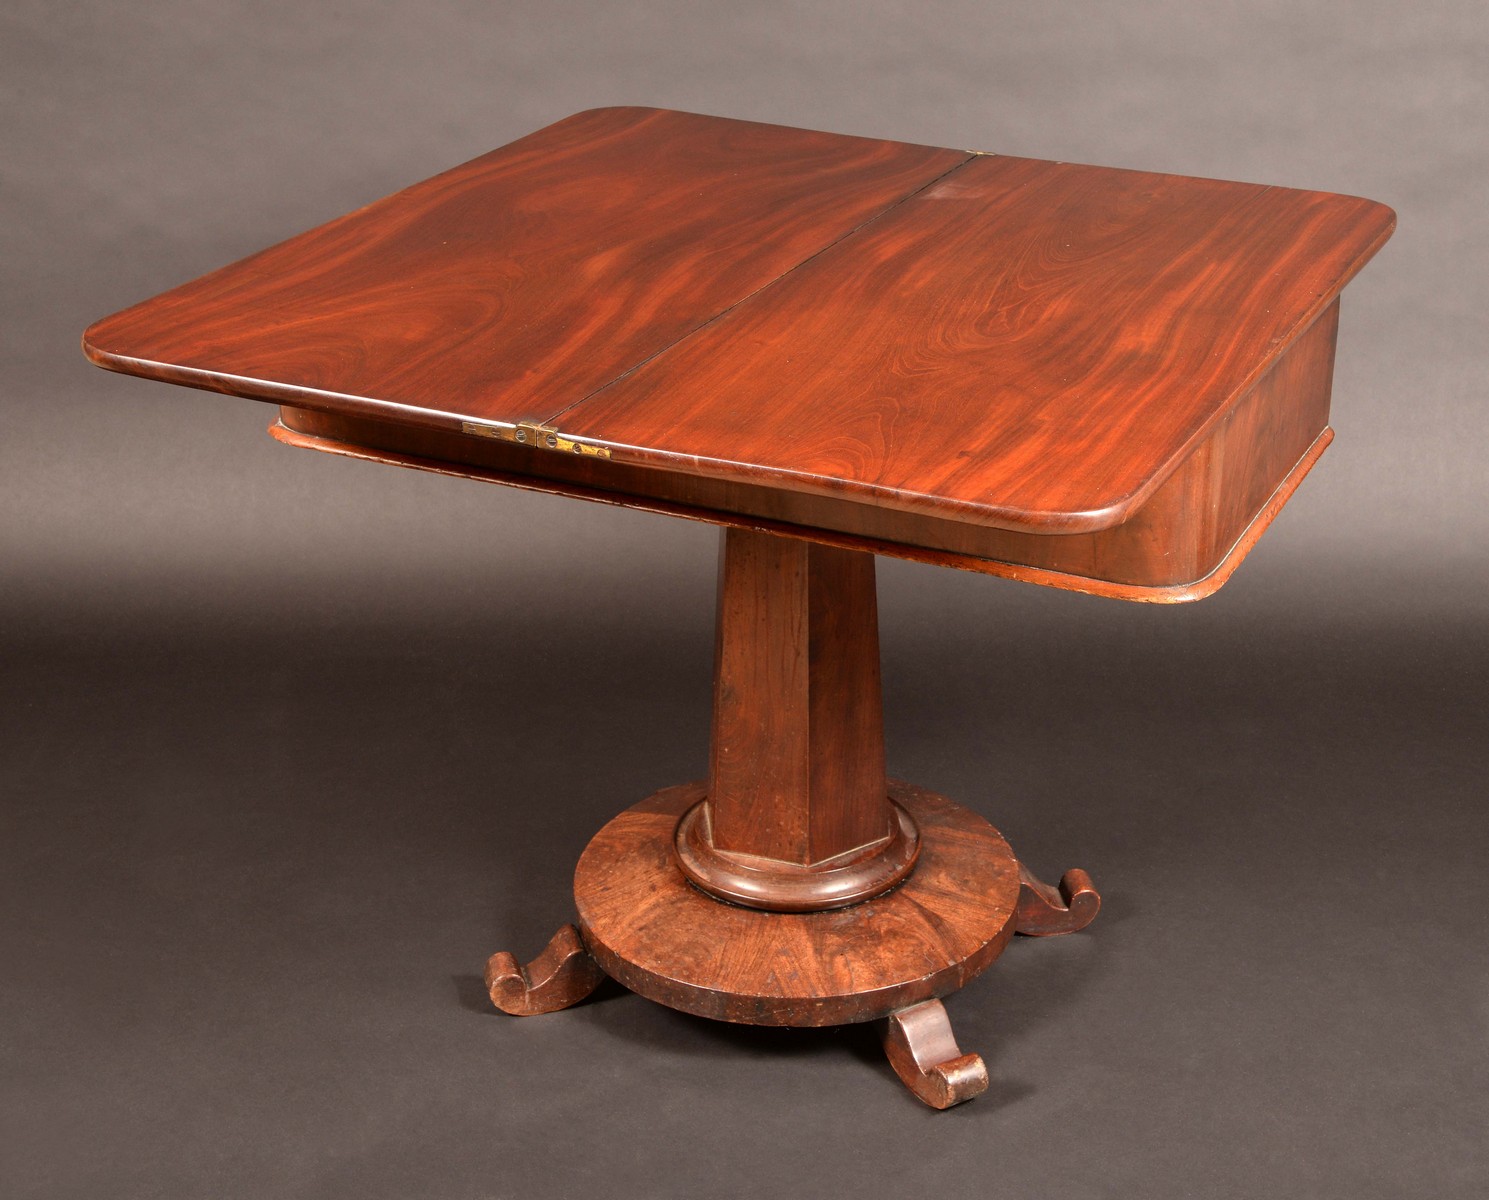 An early Victorian mahogany rounded rectangular tea table,